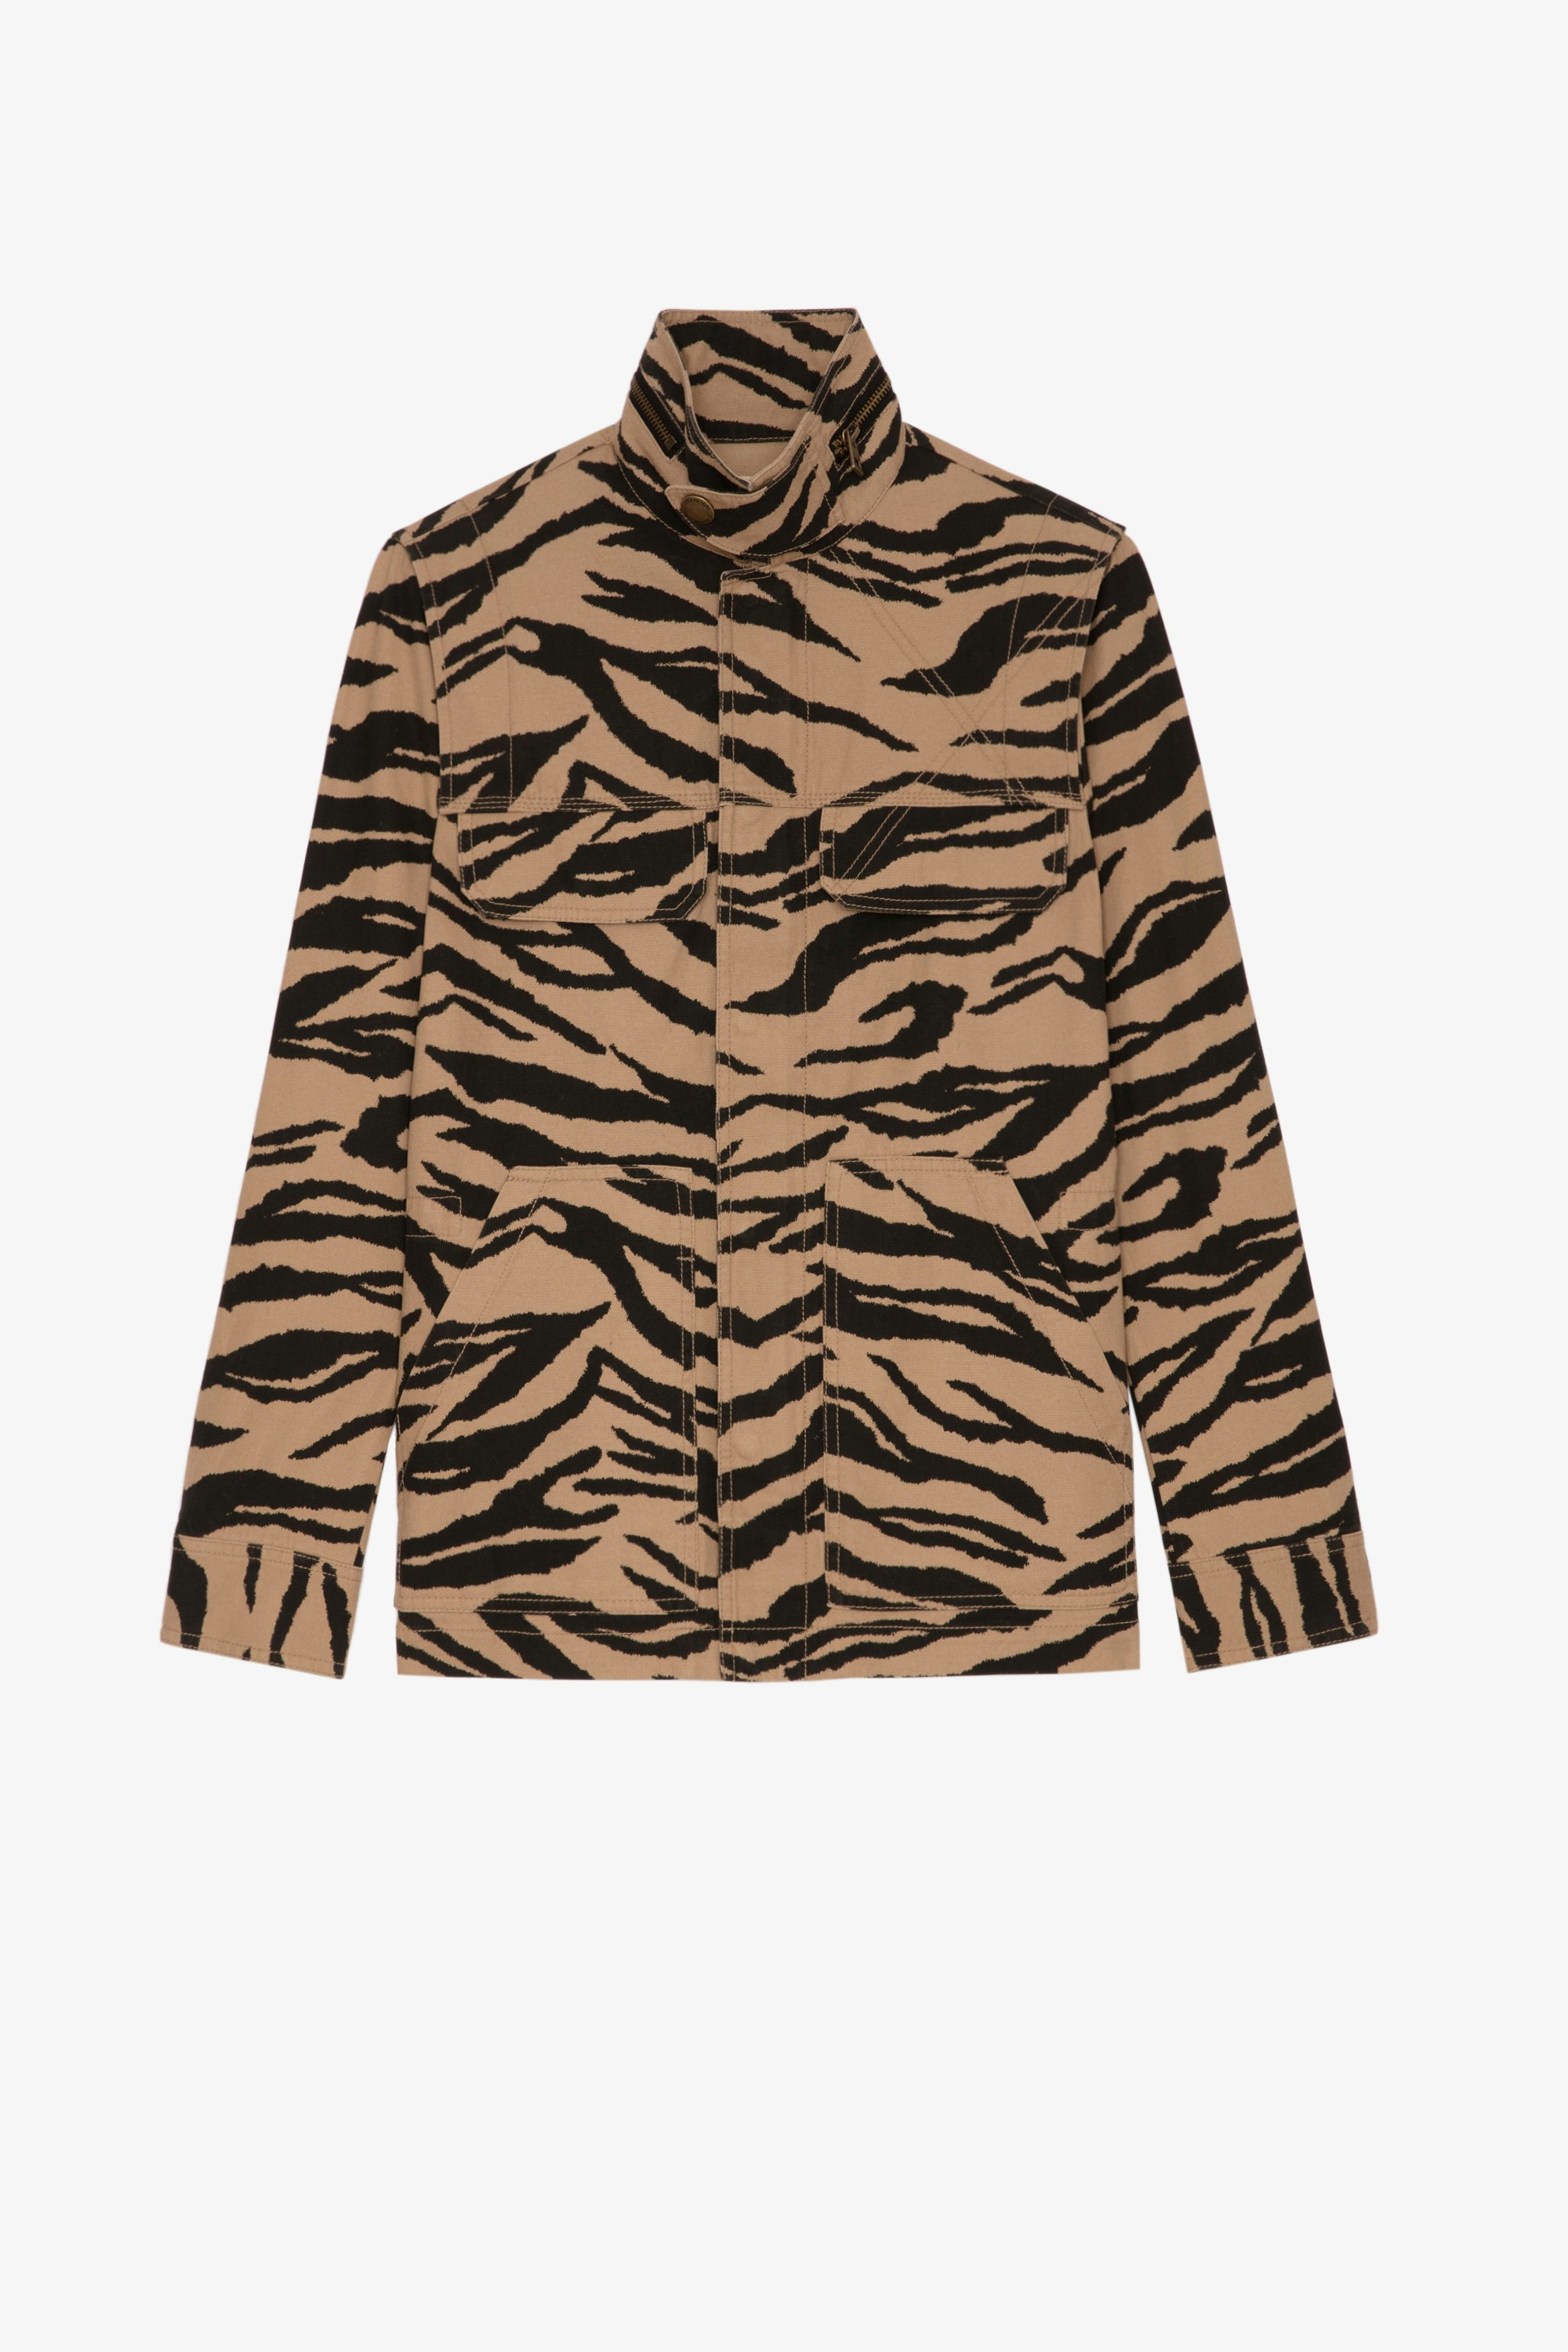 Kayaka Canvas Tiger Jacket Women's tiger-print military jacket 